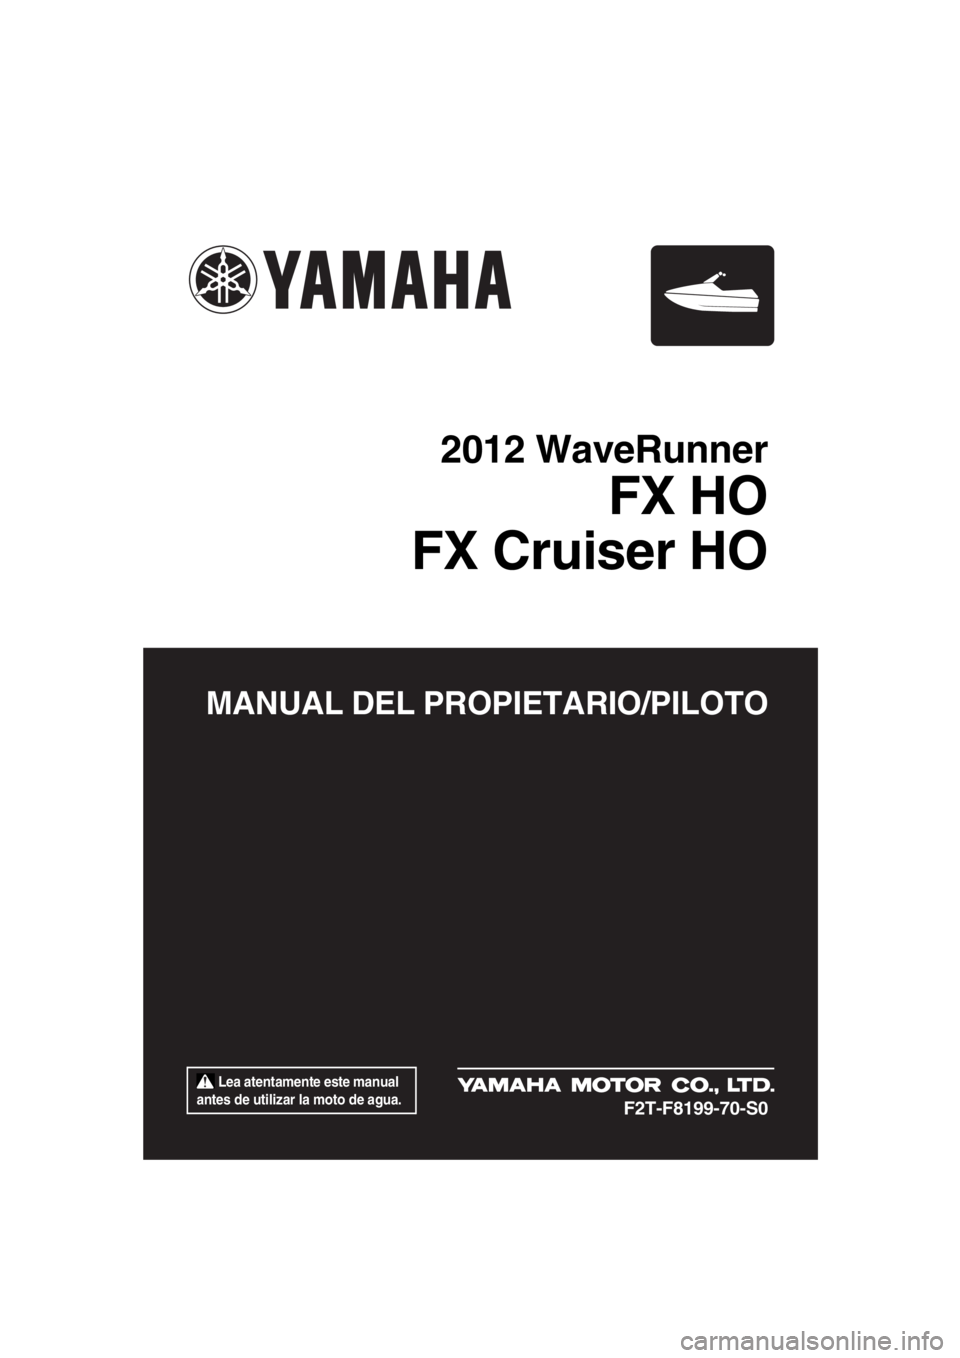 YAMAHA FX HO CRUISER 2012  Manuale de Empleo (in Spanish) 